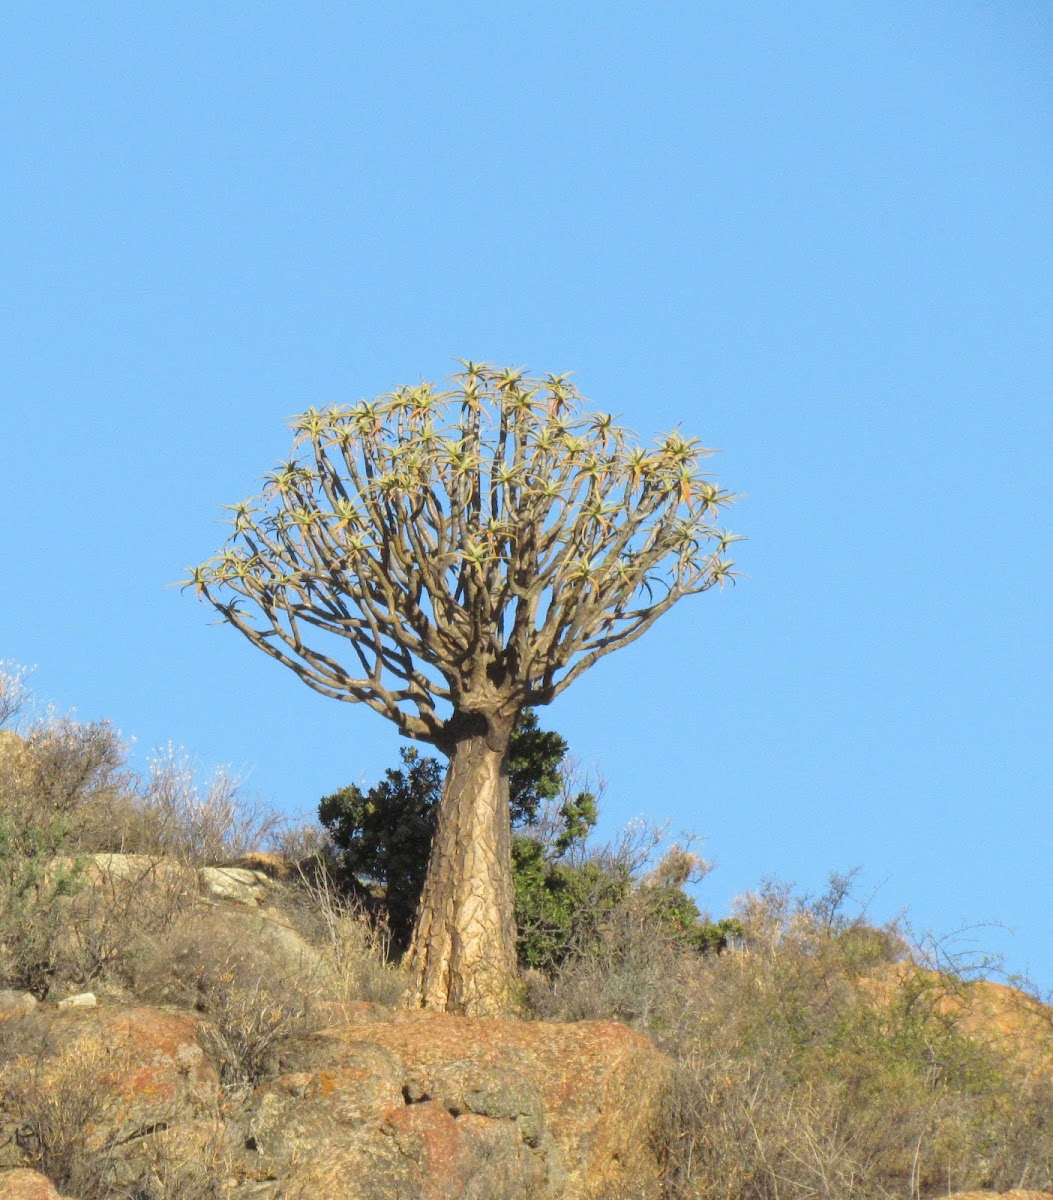 Quiver Tree (Kokerboom)